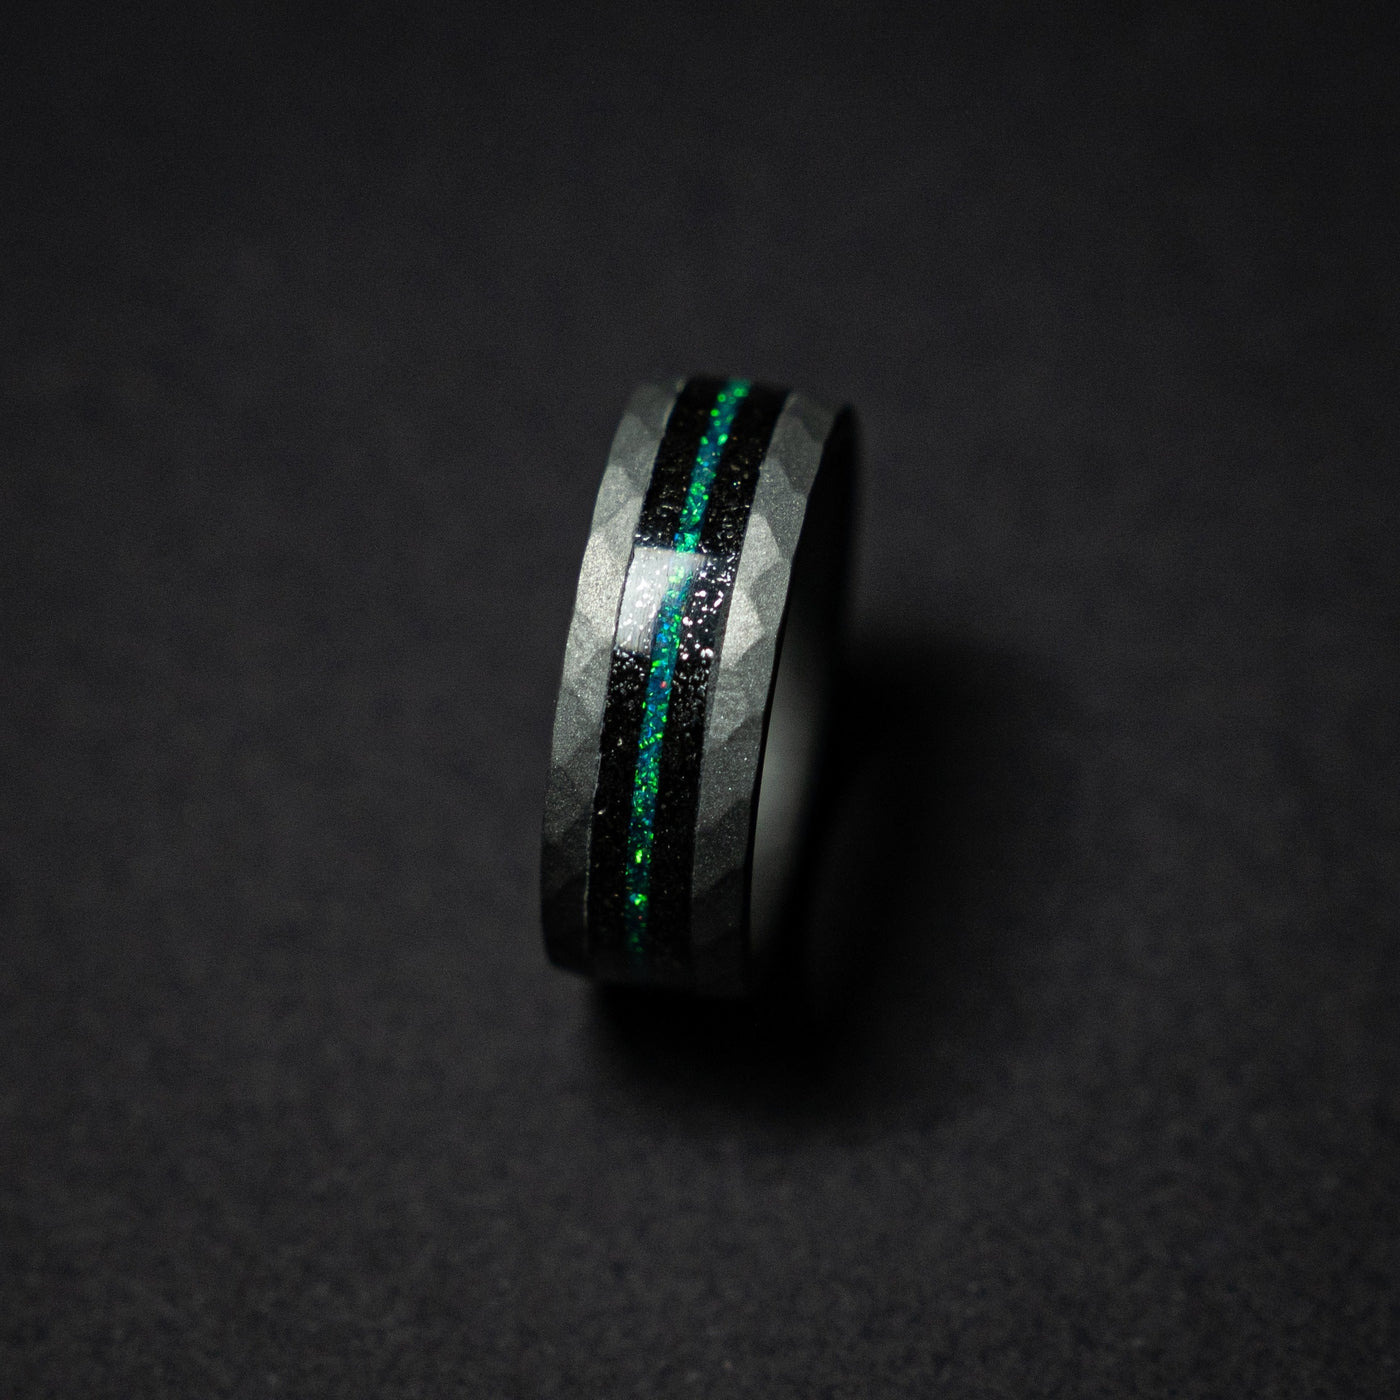 tungsten ring. Meteorite ring. mens wedding band. opal ring. wedding gift. tungsten ring. personalized ring. Galaxy Opal. man opal ring.